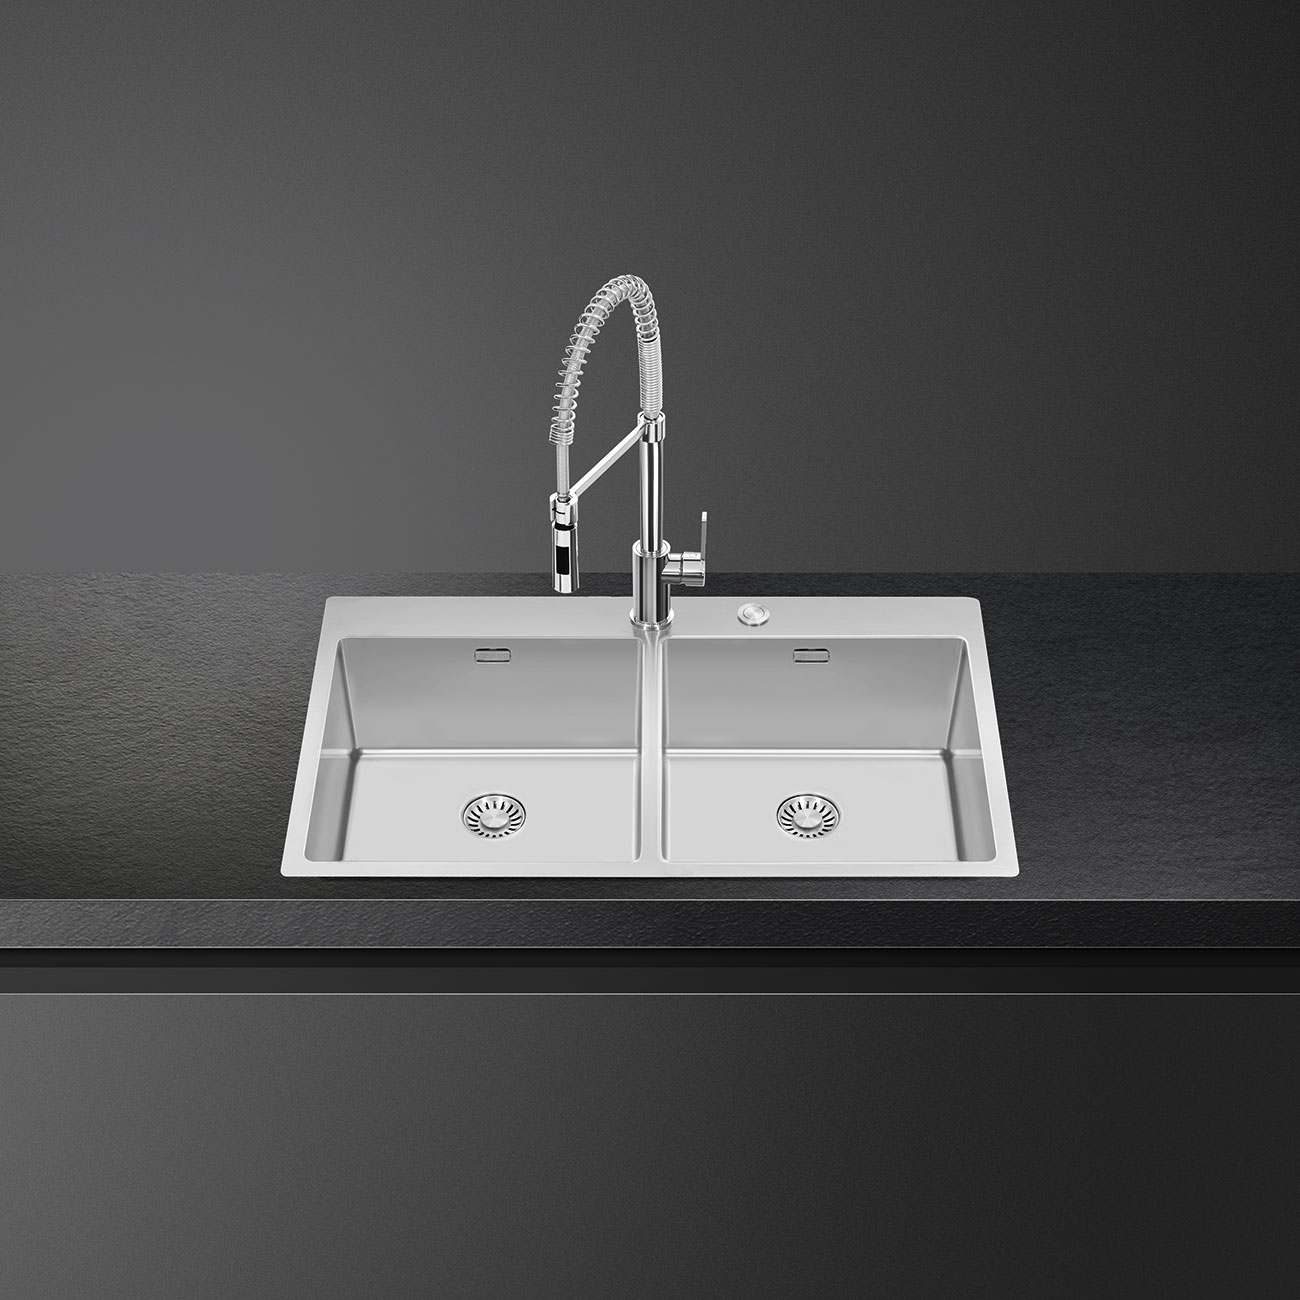 Semi-professional single lever kitchen tap - Smeg_3